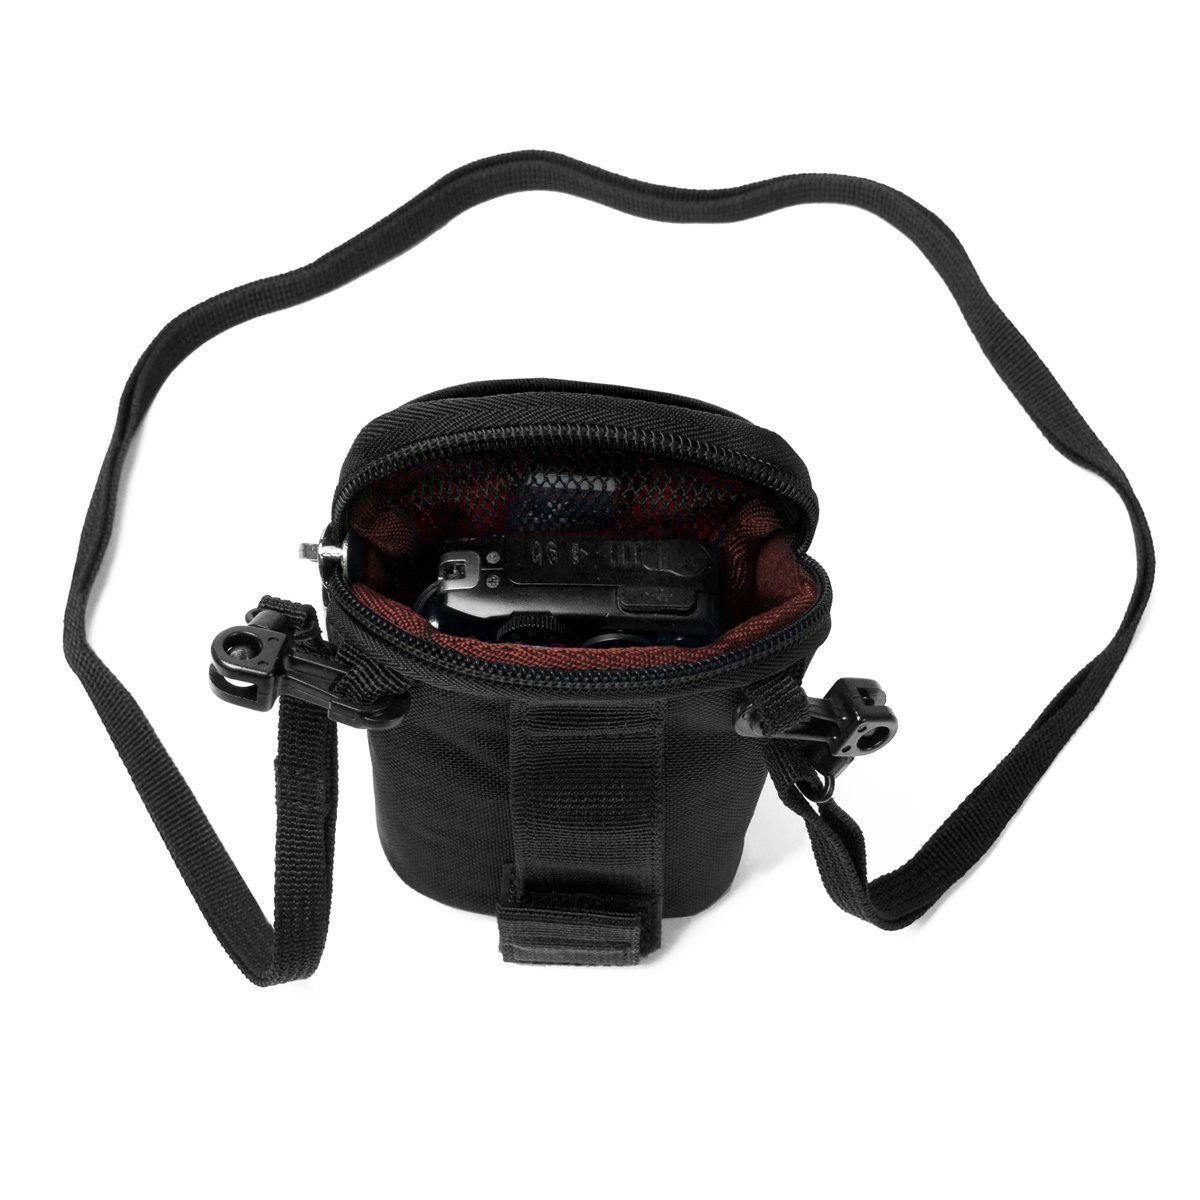 Crumpler Base Layer Camera Pouch S black rusted red (BLCP-S-001) crna hrđavo crvena torba za fotoaparat